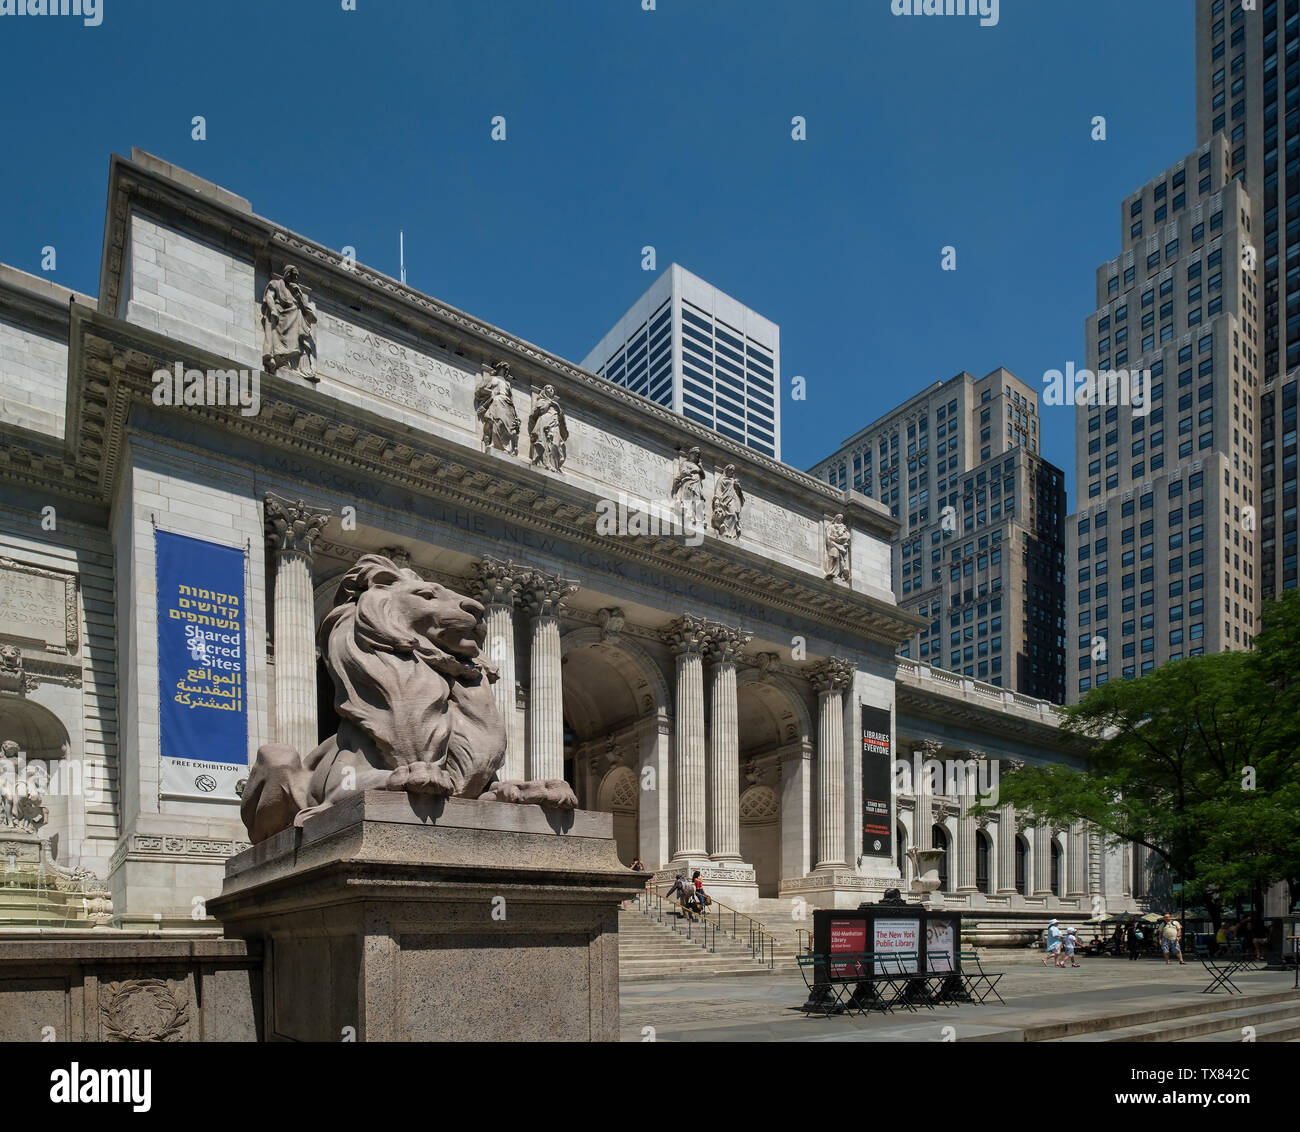 La Bibliothèque publique de New York, Manhattan, New York, USA Banque D'Images